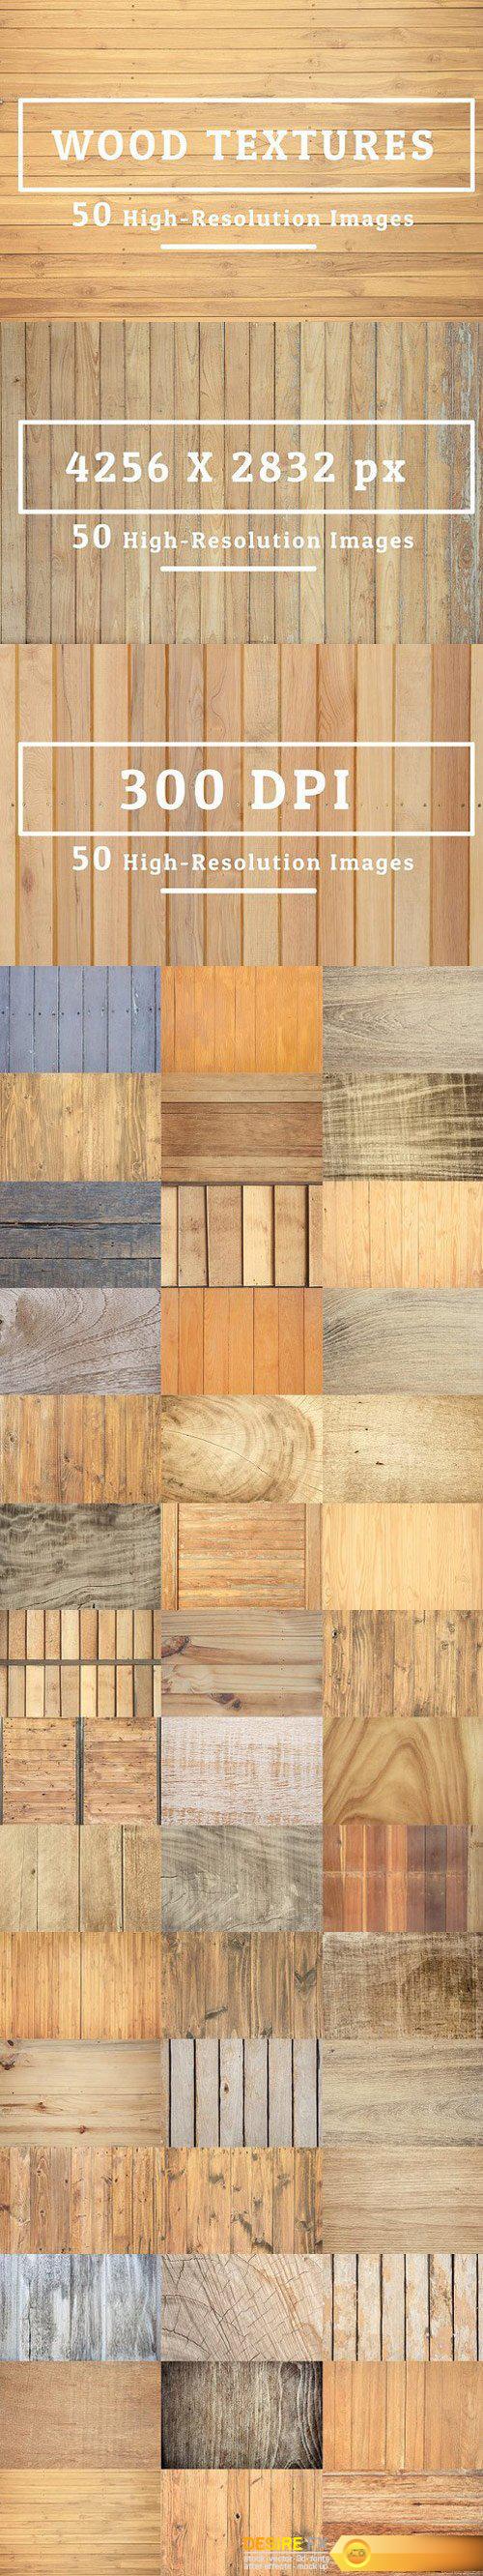 CM - 50 Wood Texture Background Set 02 518468